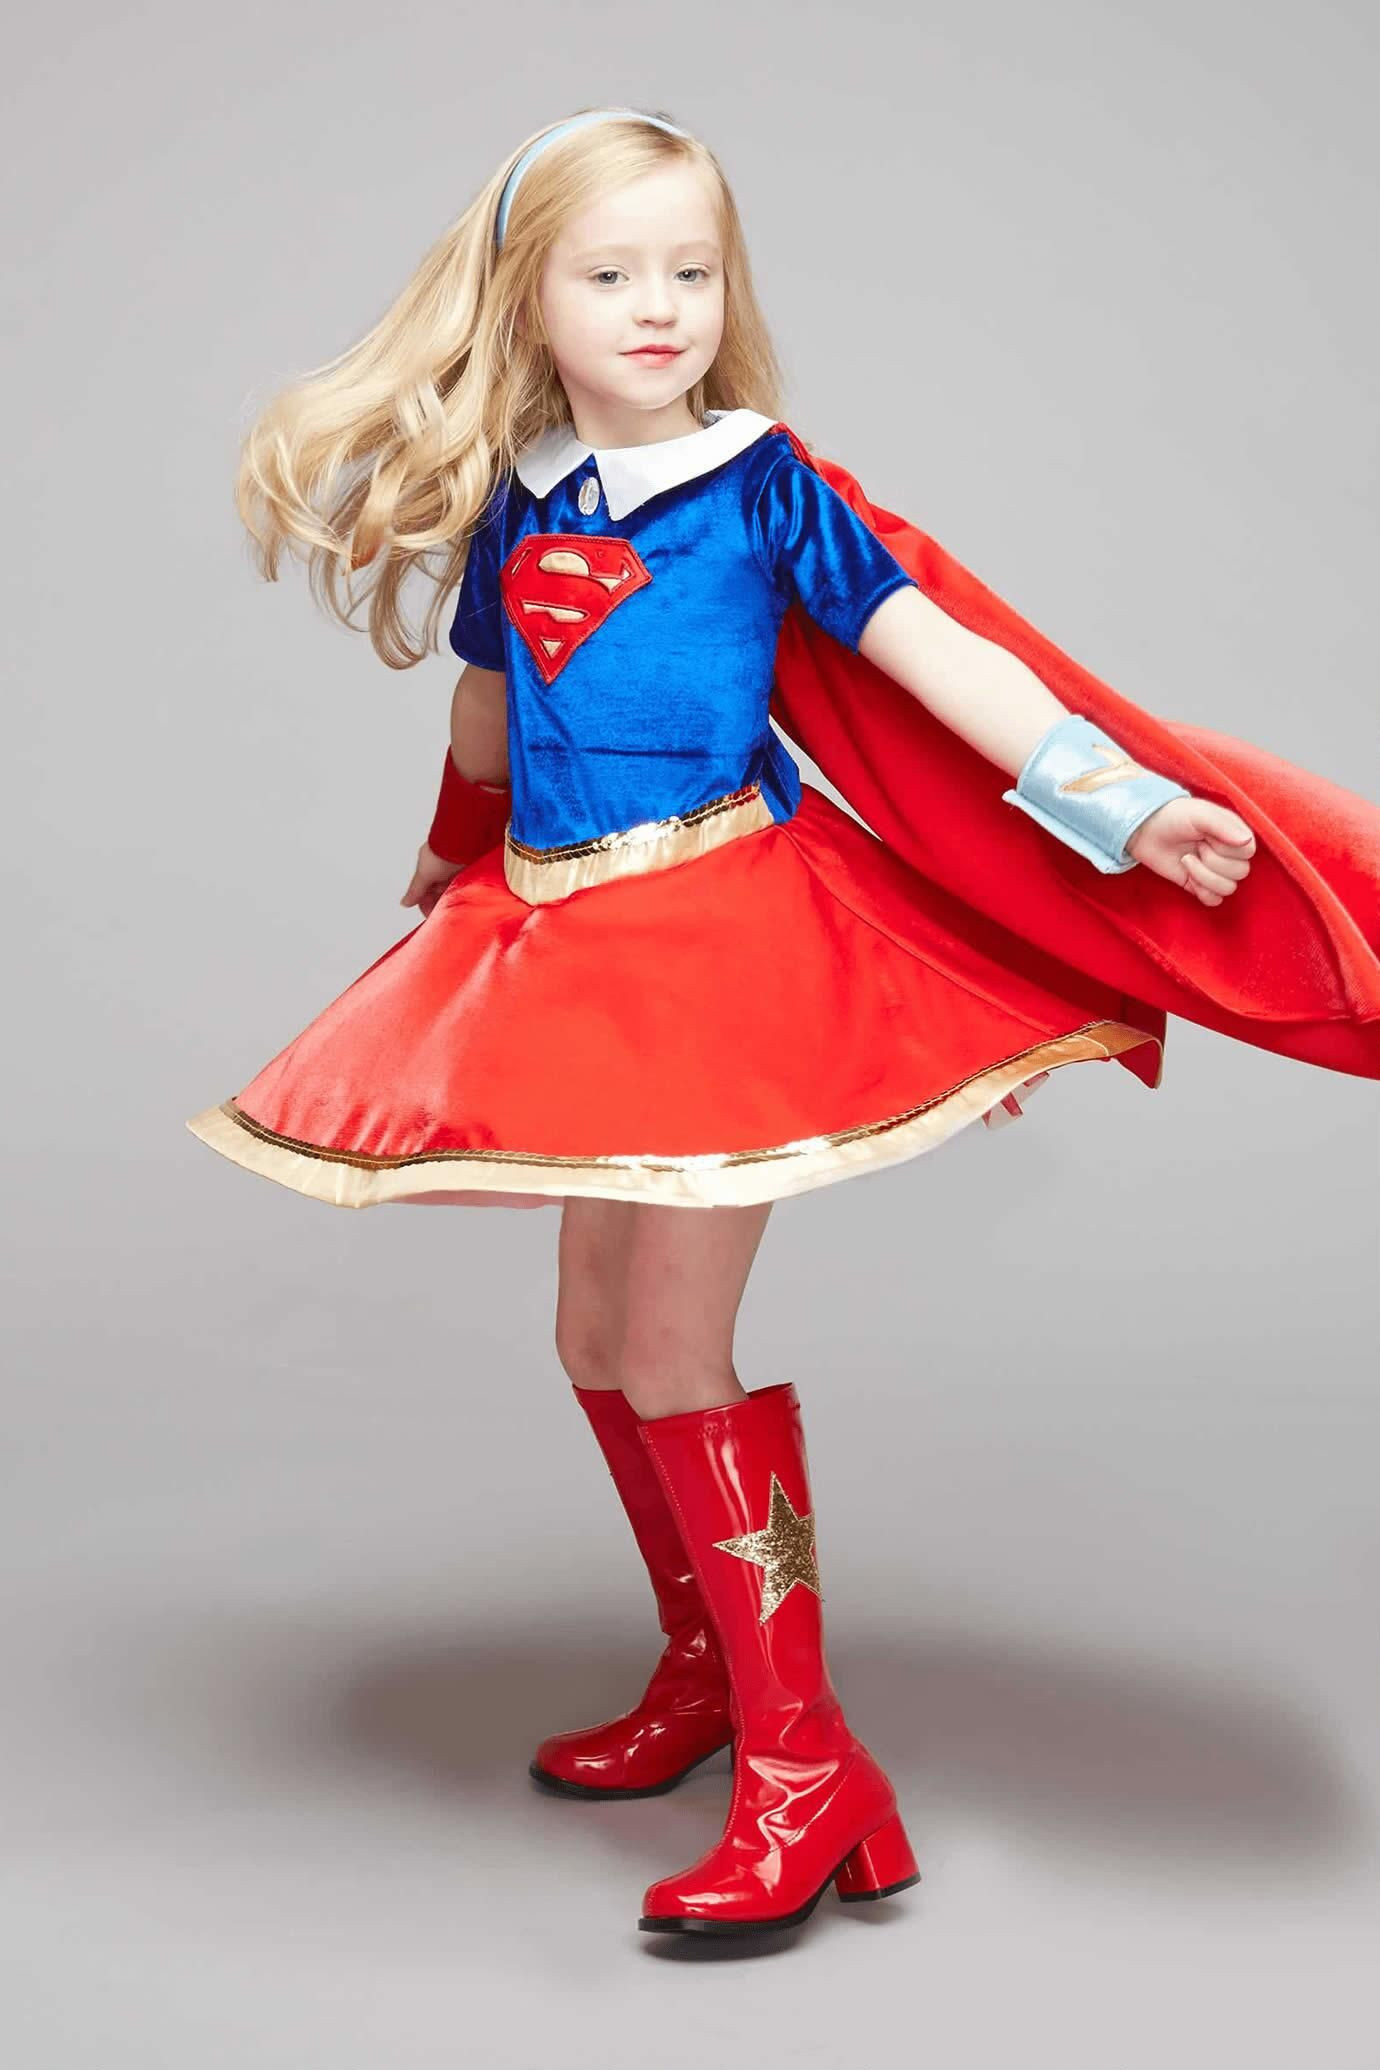 DIY Superhero Costume For Girls
 Supergirl Costume For Kids DC Super Hero Girls